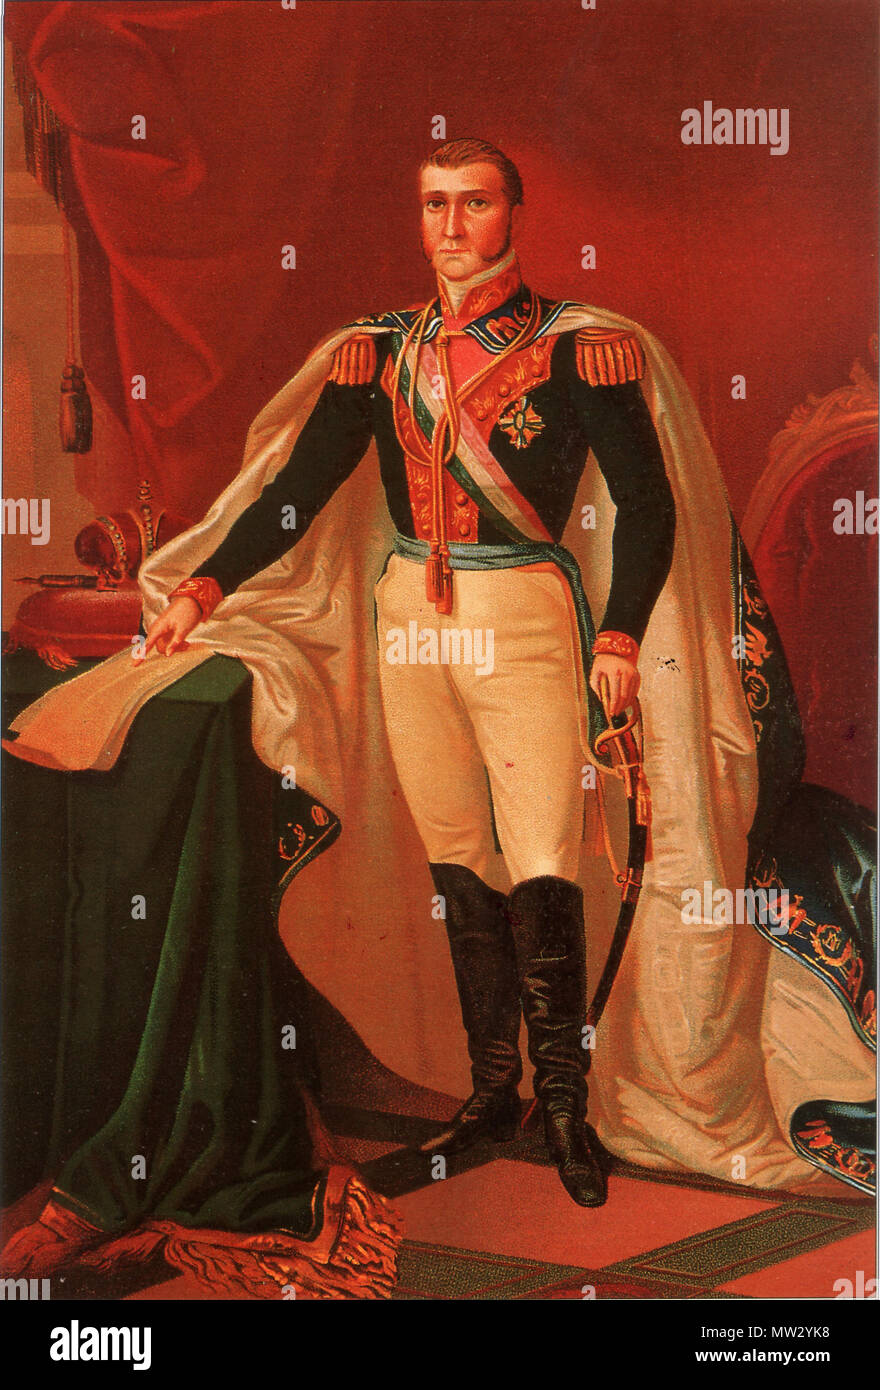 579 Su Caridad Imperial Agustín de Iturbide, Emperador de México. Stockfoto